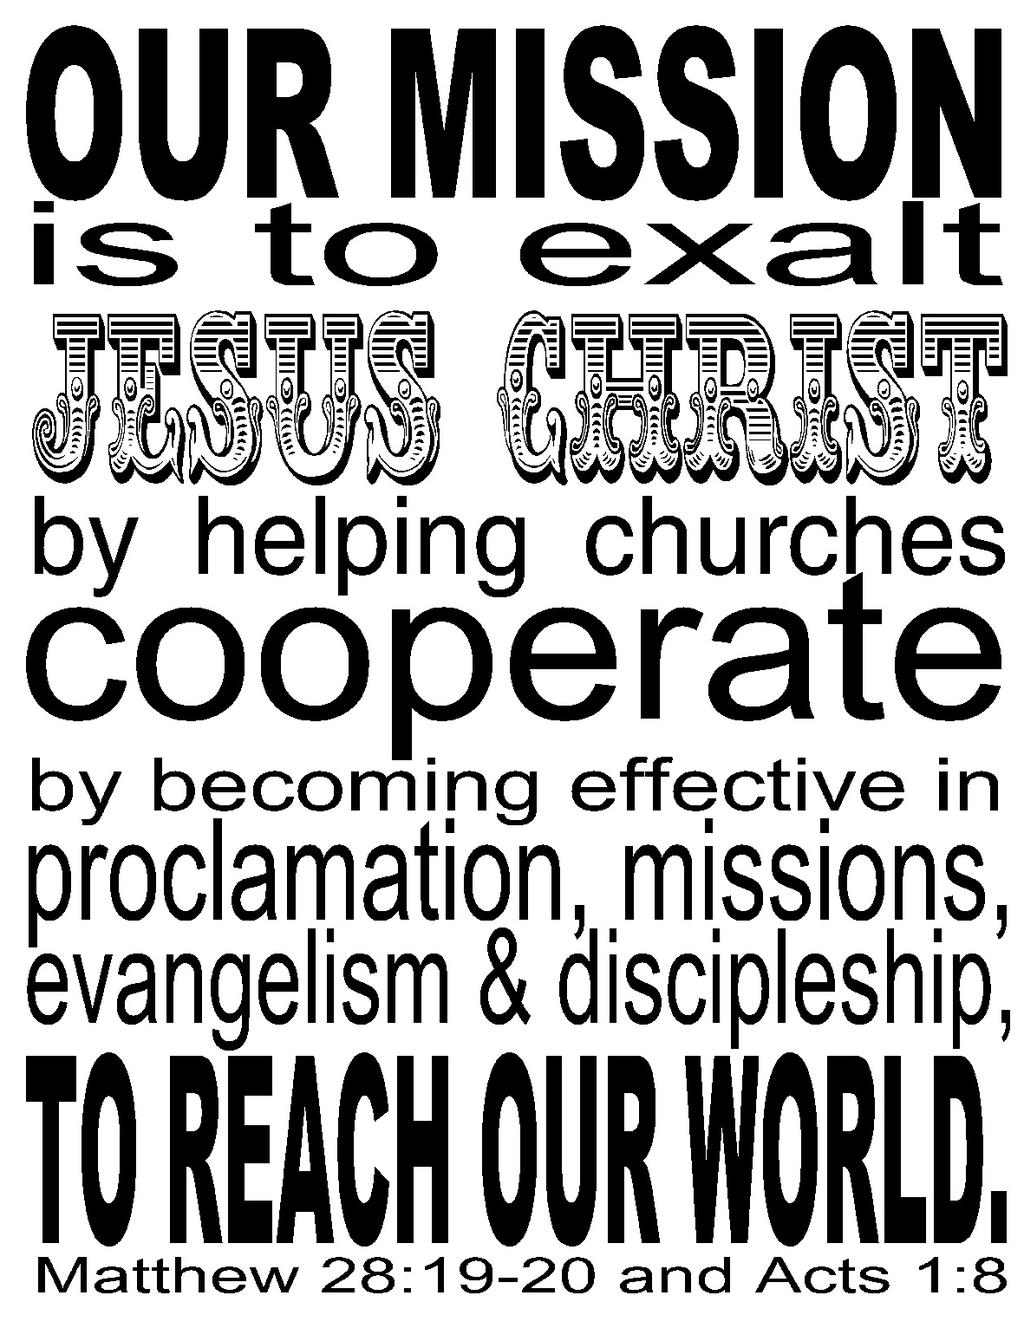 ^ Hous on Baptist Association 2116 Hwy 41 ^ P O Box 1274 ^ Cordele, GA 31010 www.houstonbaptist.